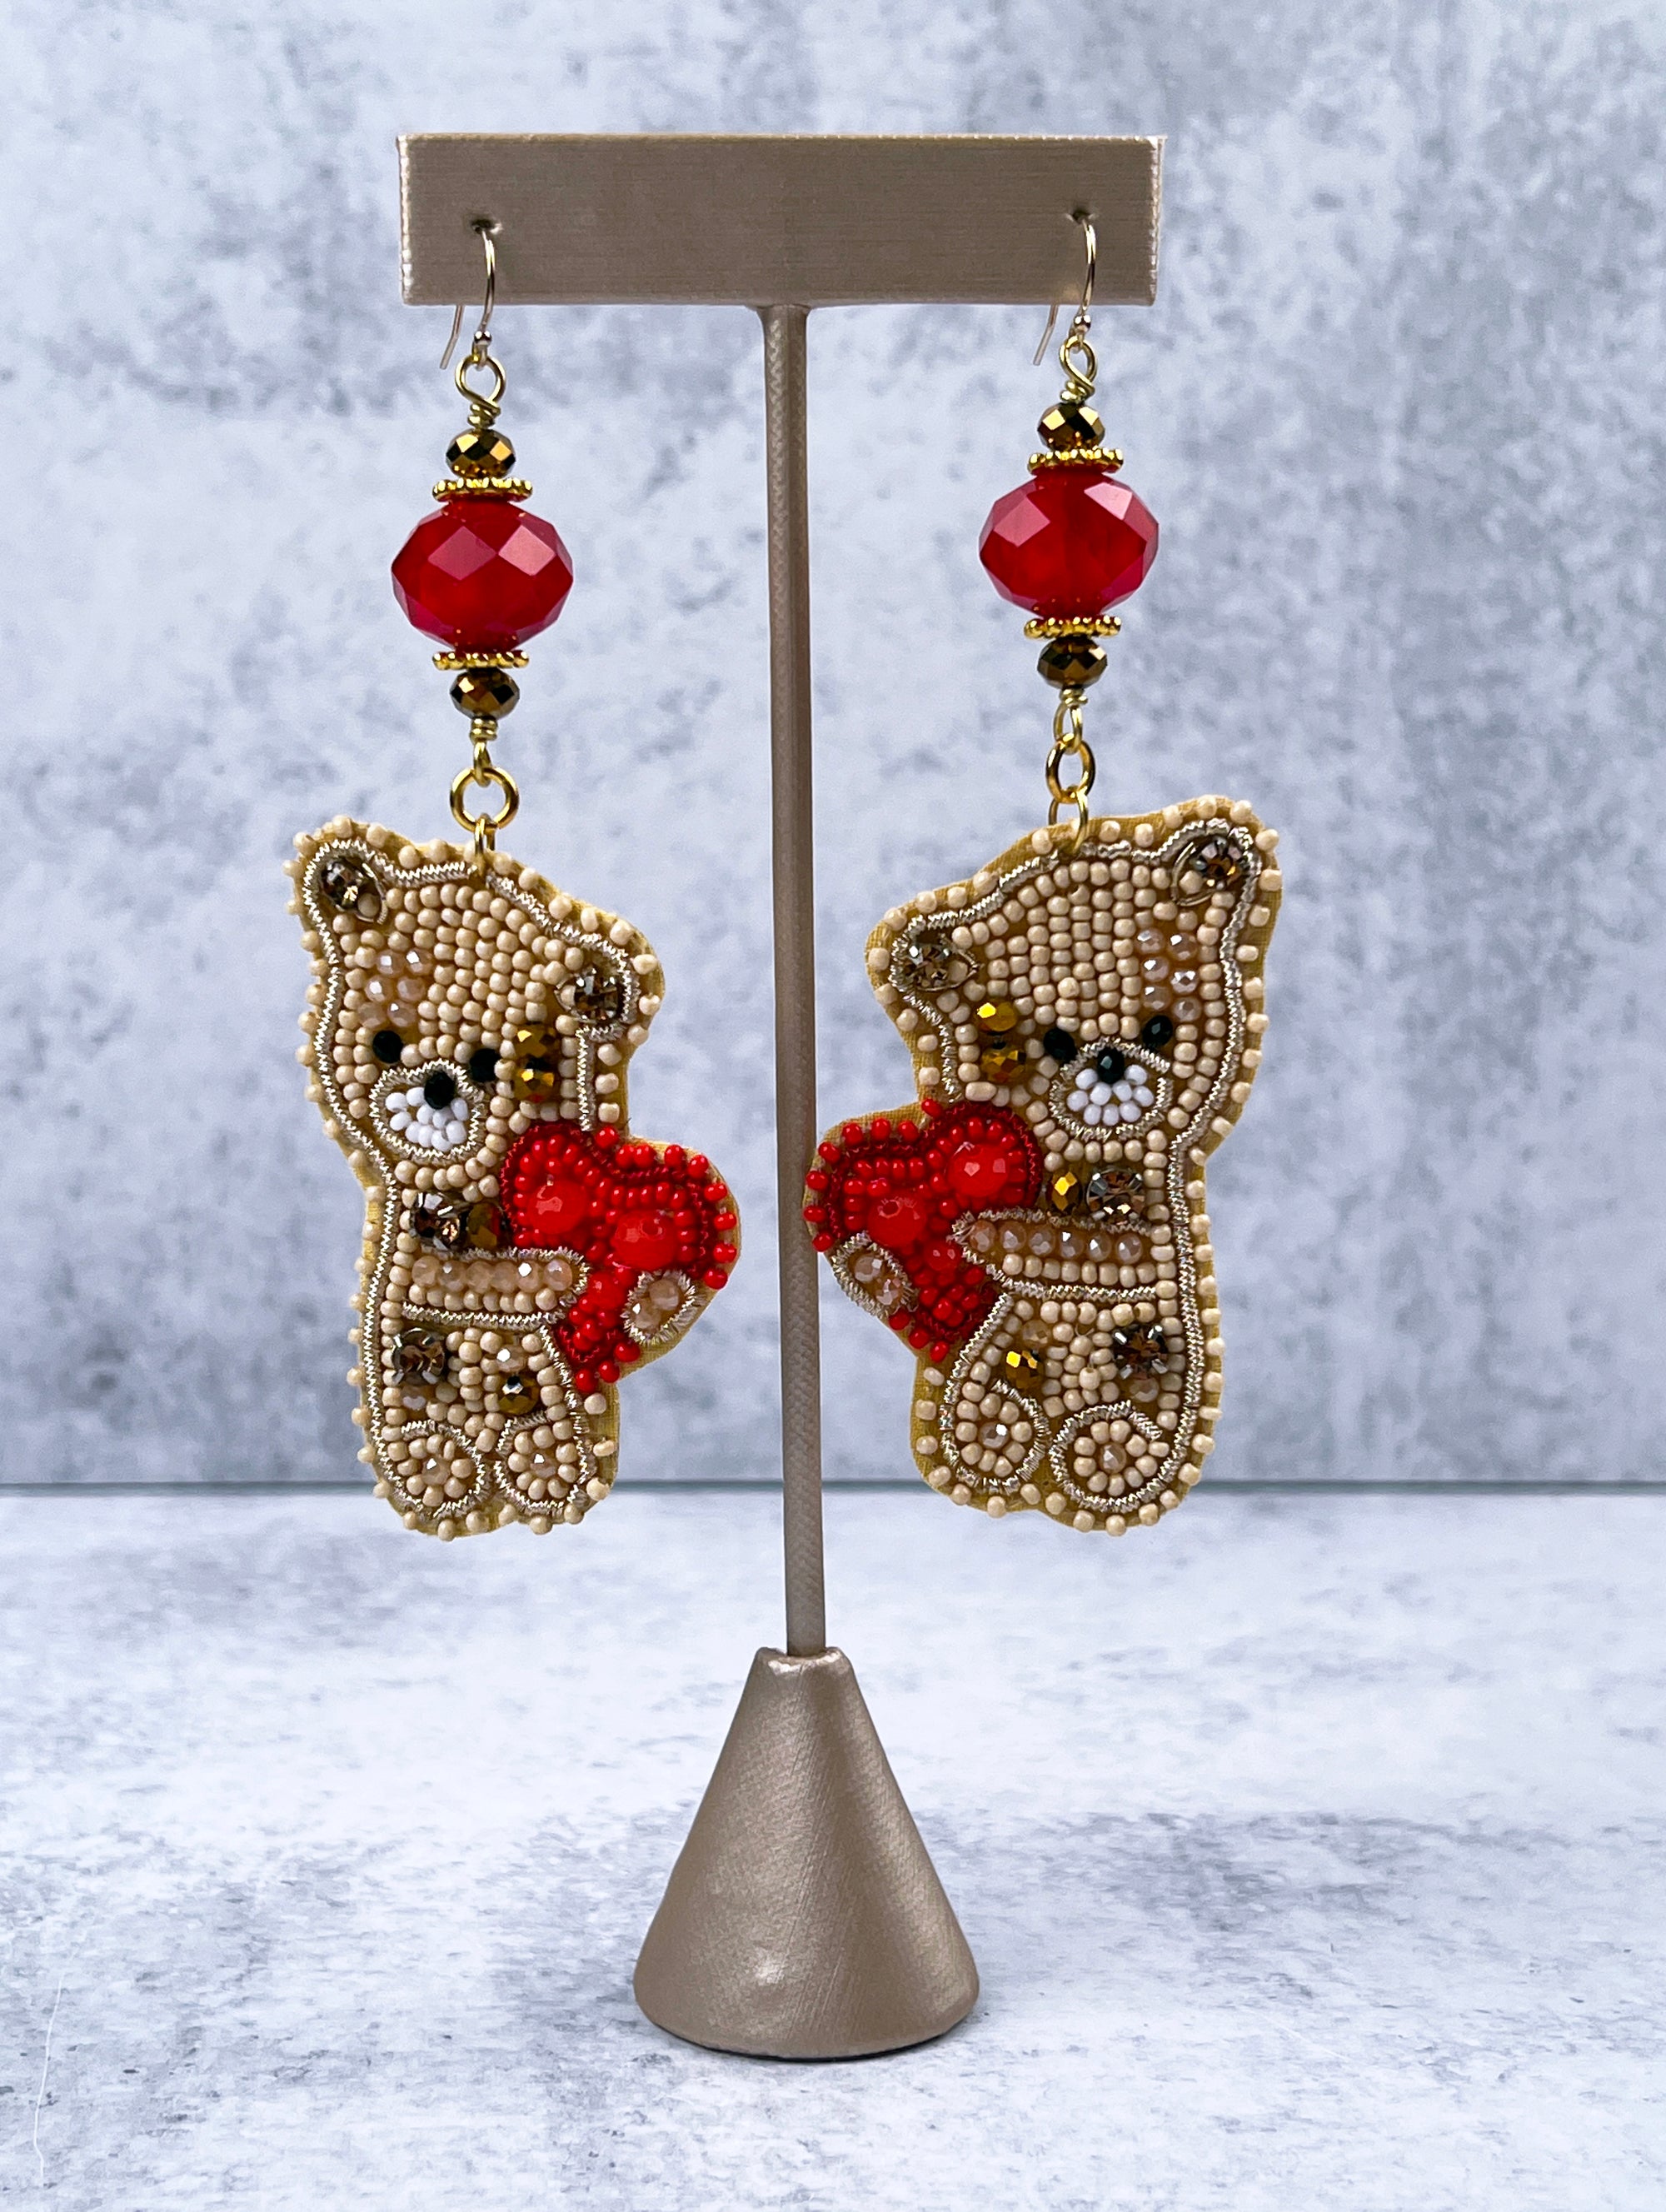 Teddy Bears with Love Earrings